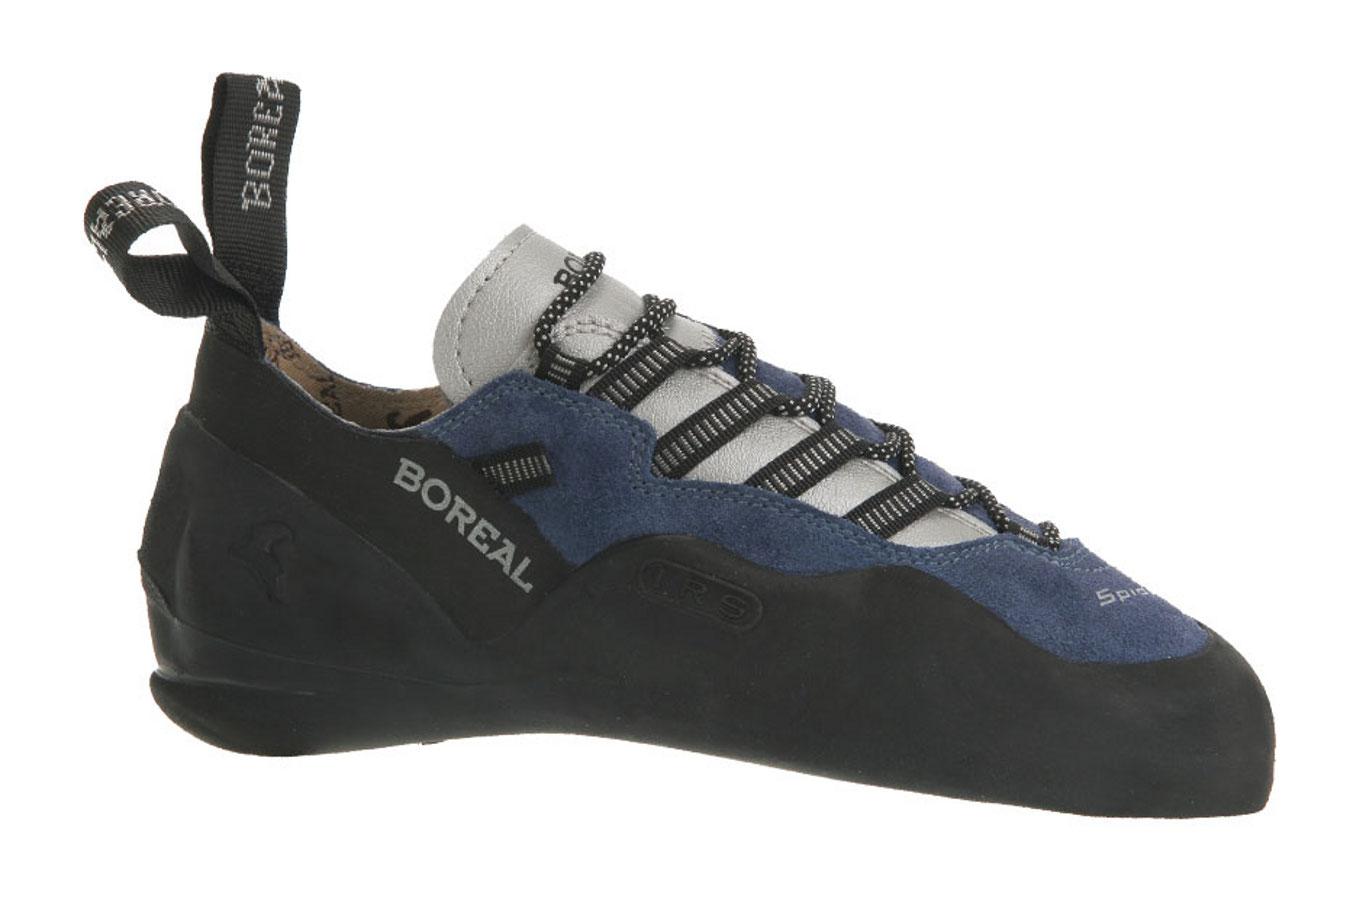 Foto Boreal Spider Zapatillas para escalada azul/negro, 46